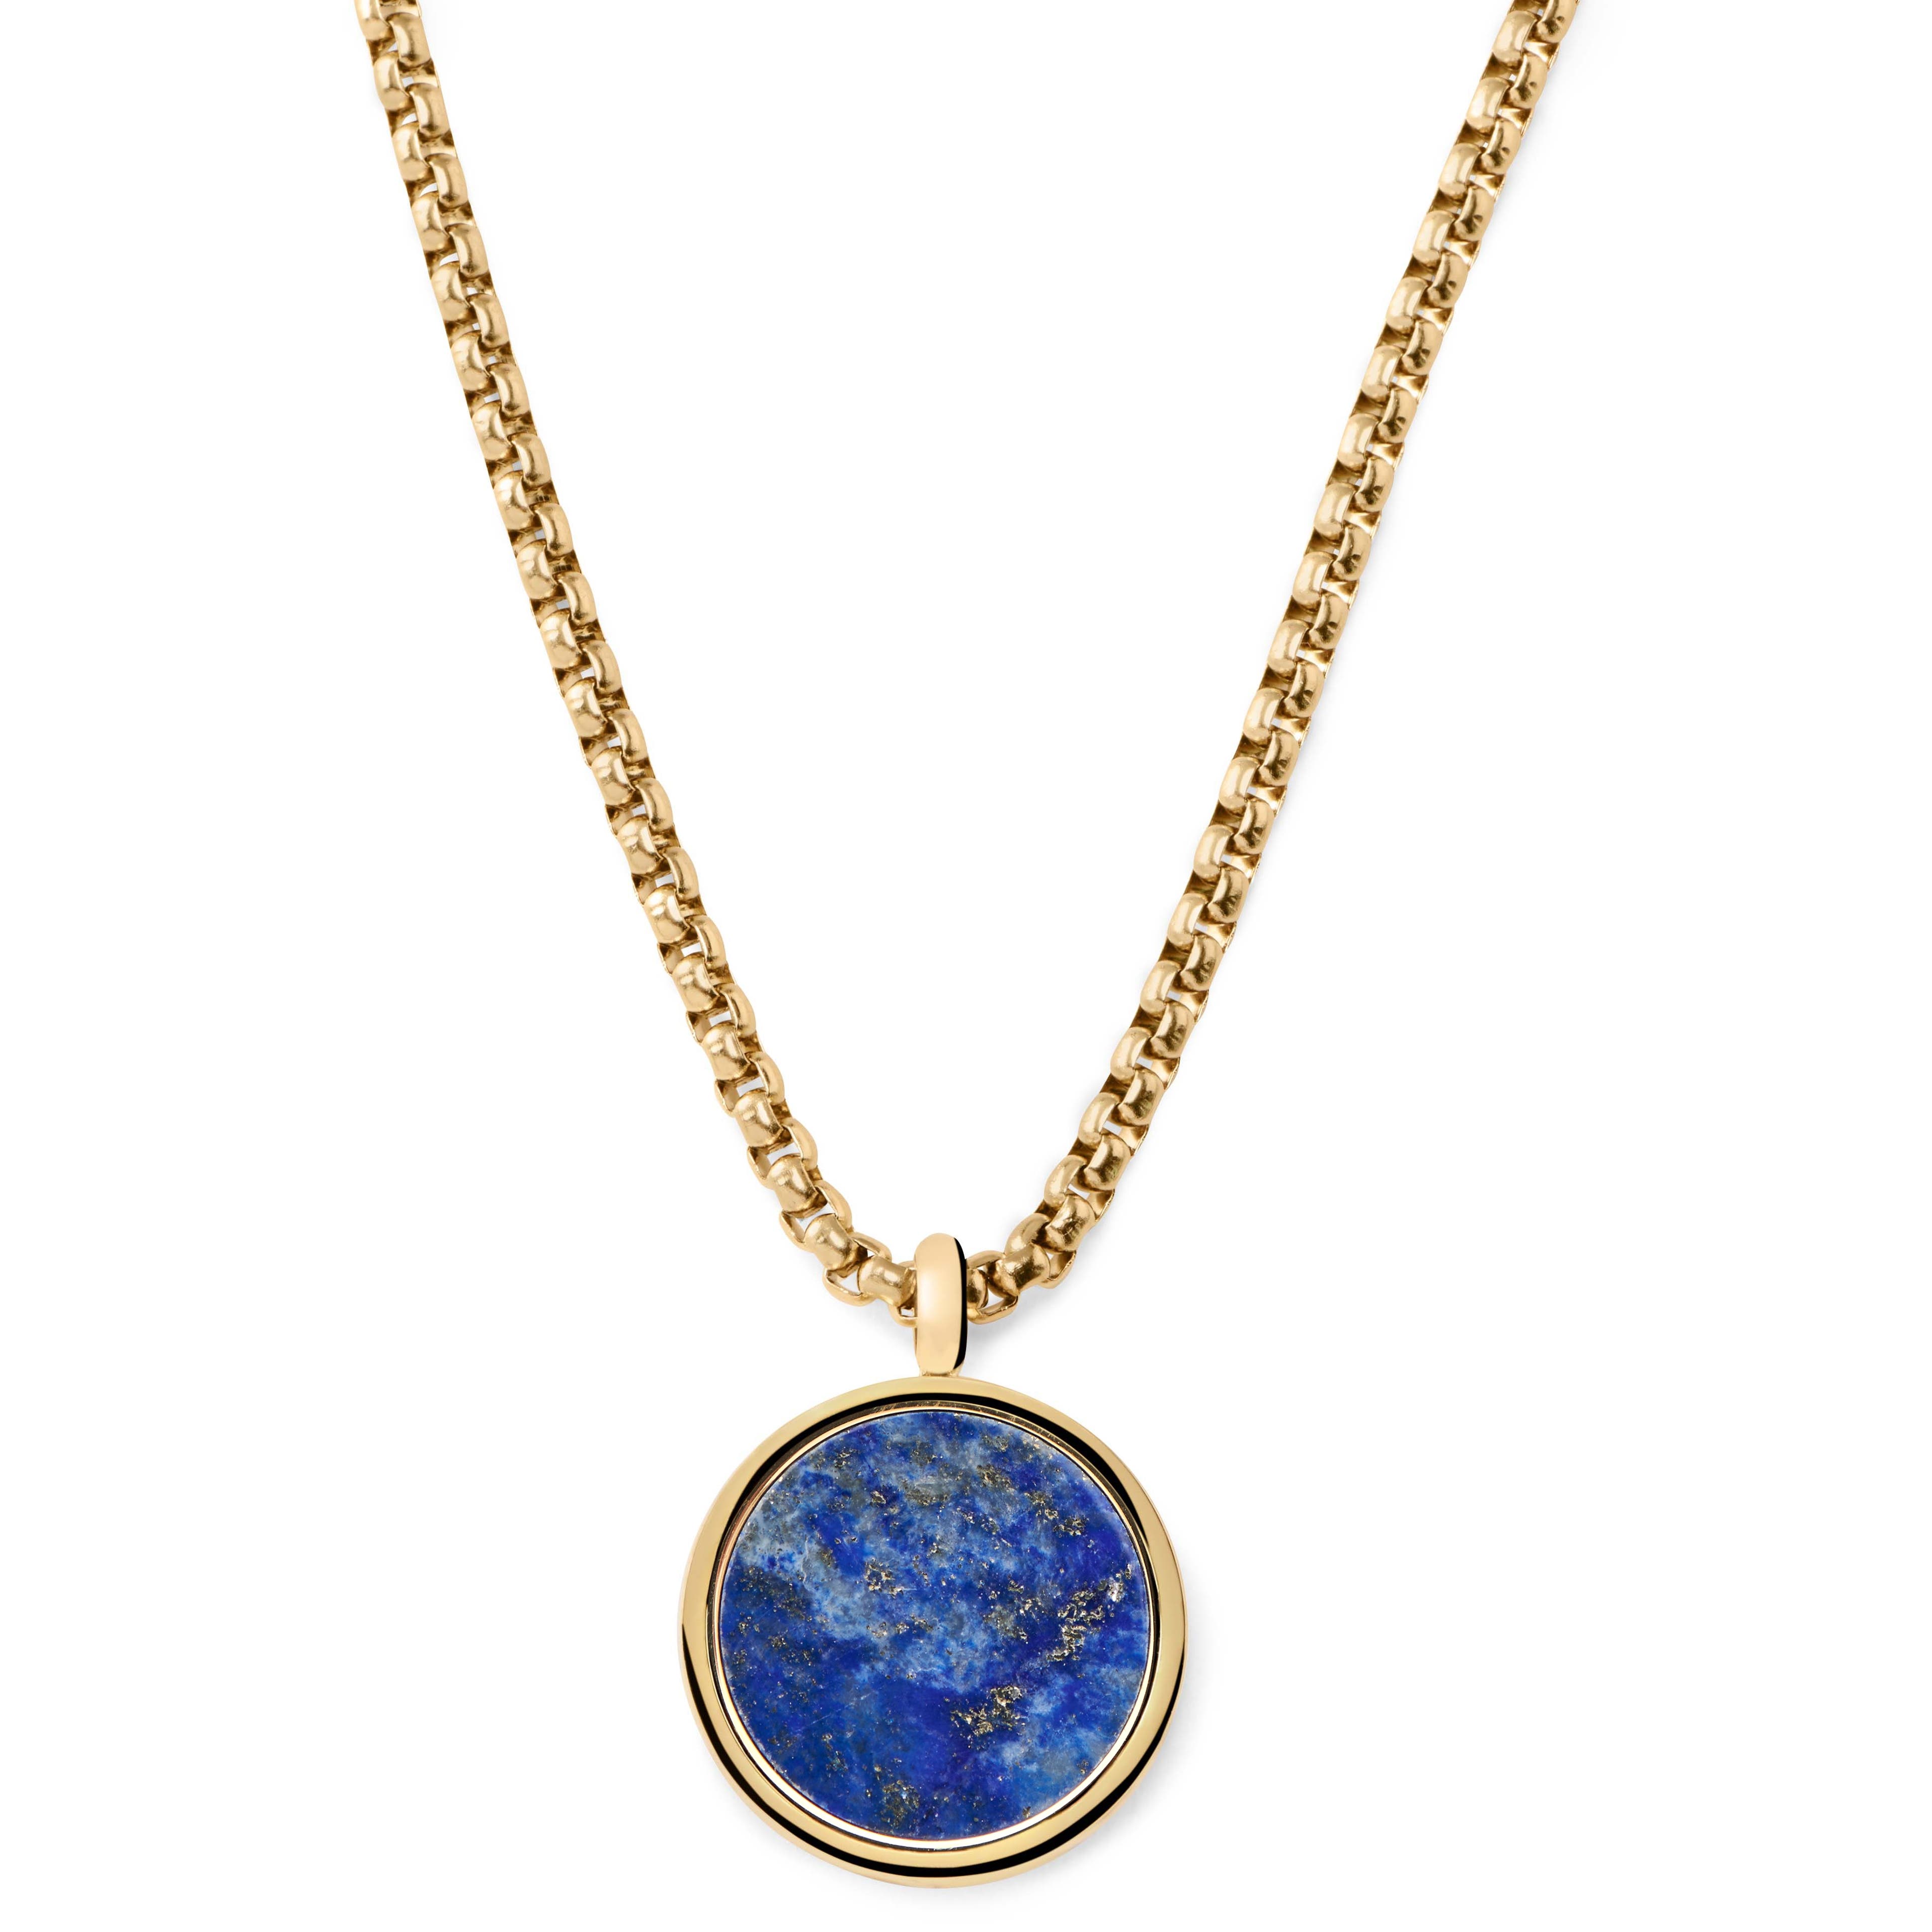 Orisun | Goudkleurige Ketting met Ronde Hanger van Lapis Lazuli